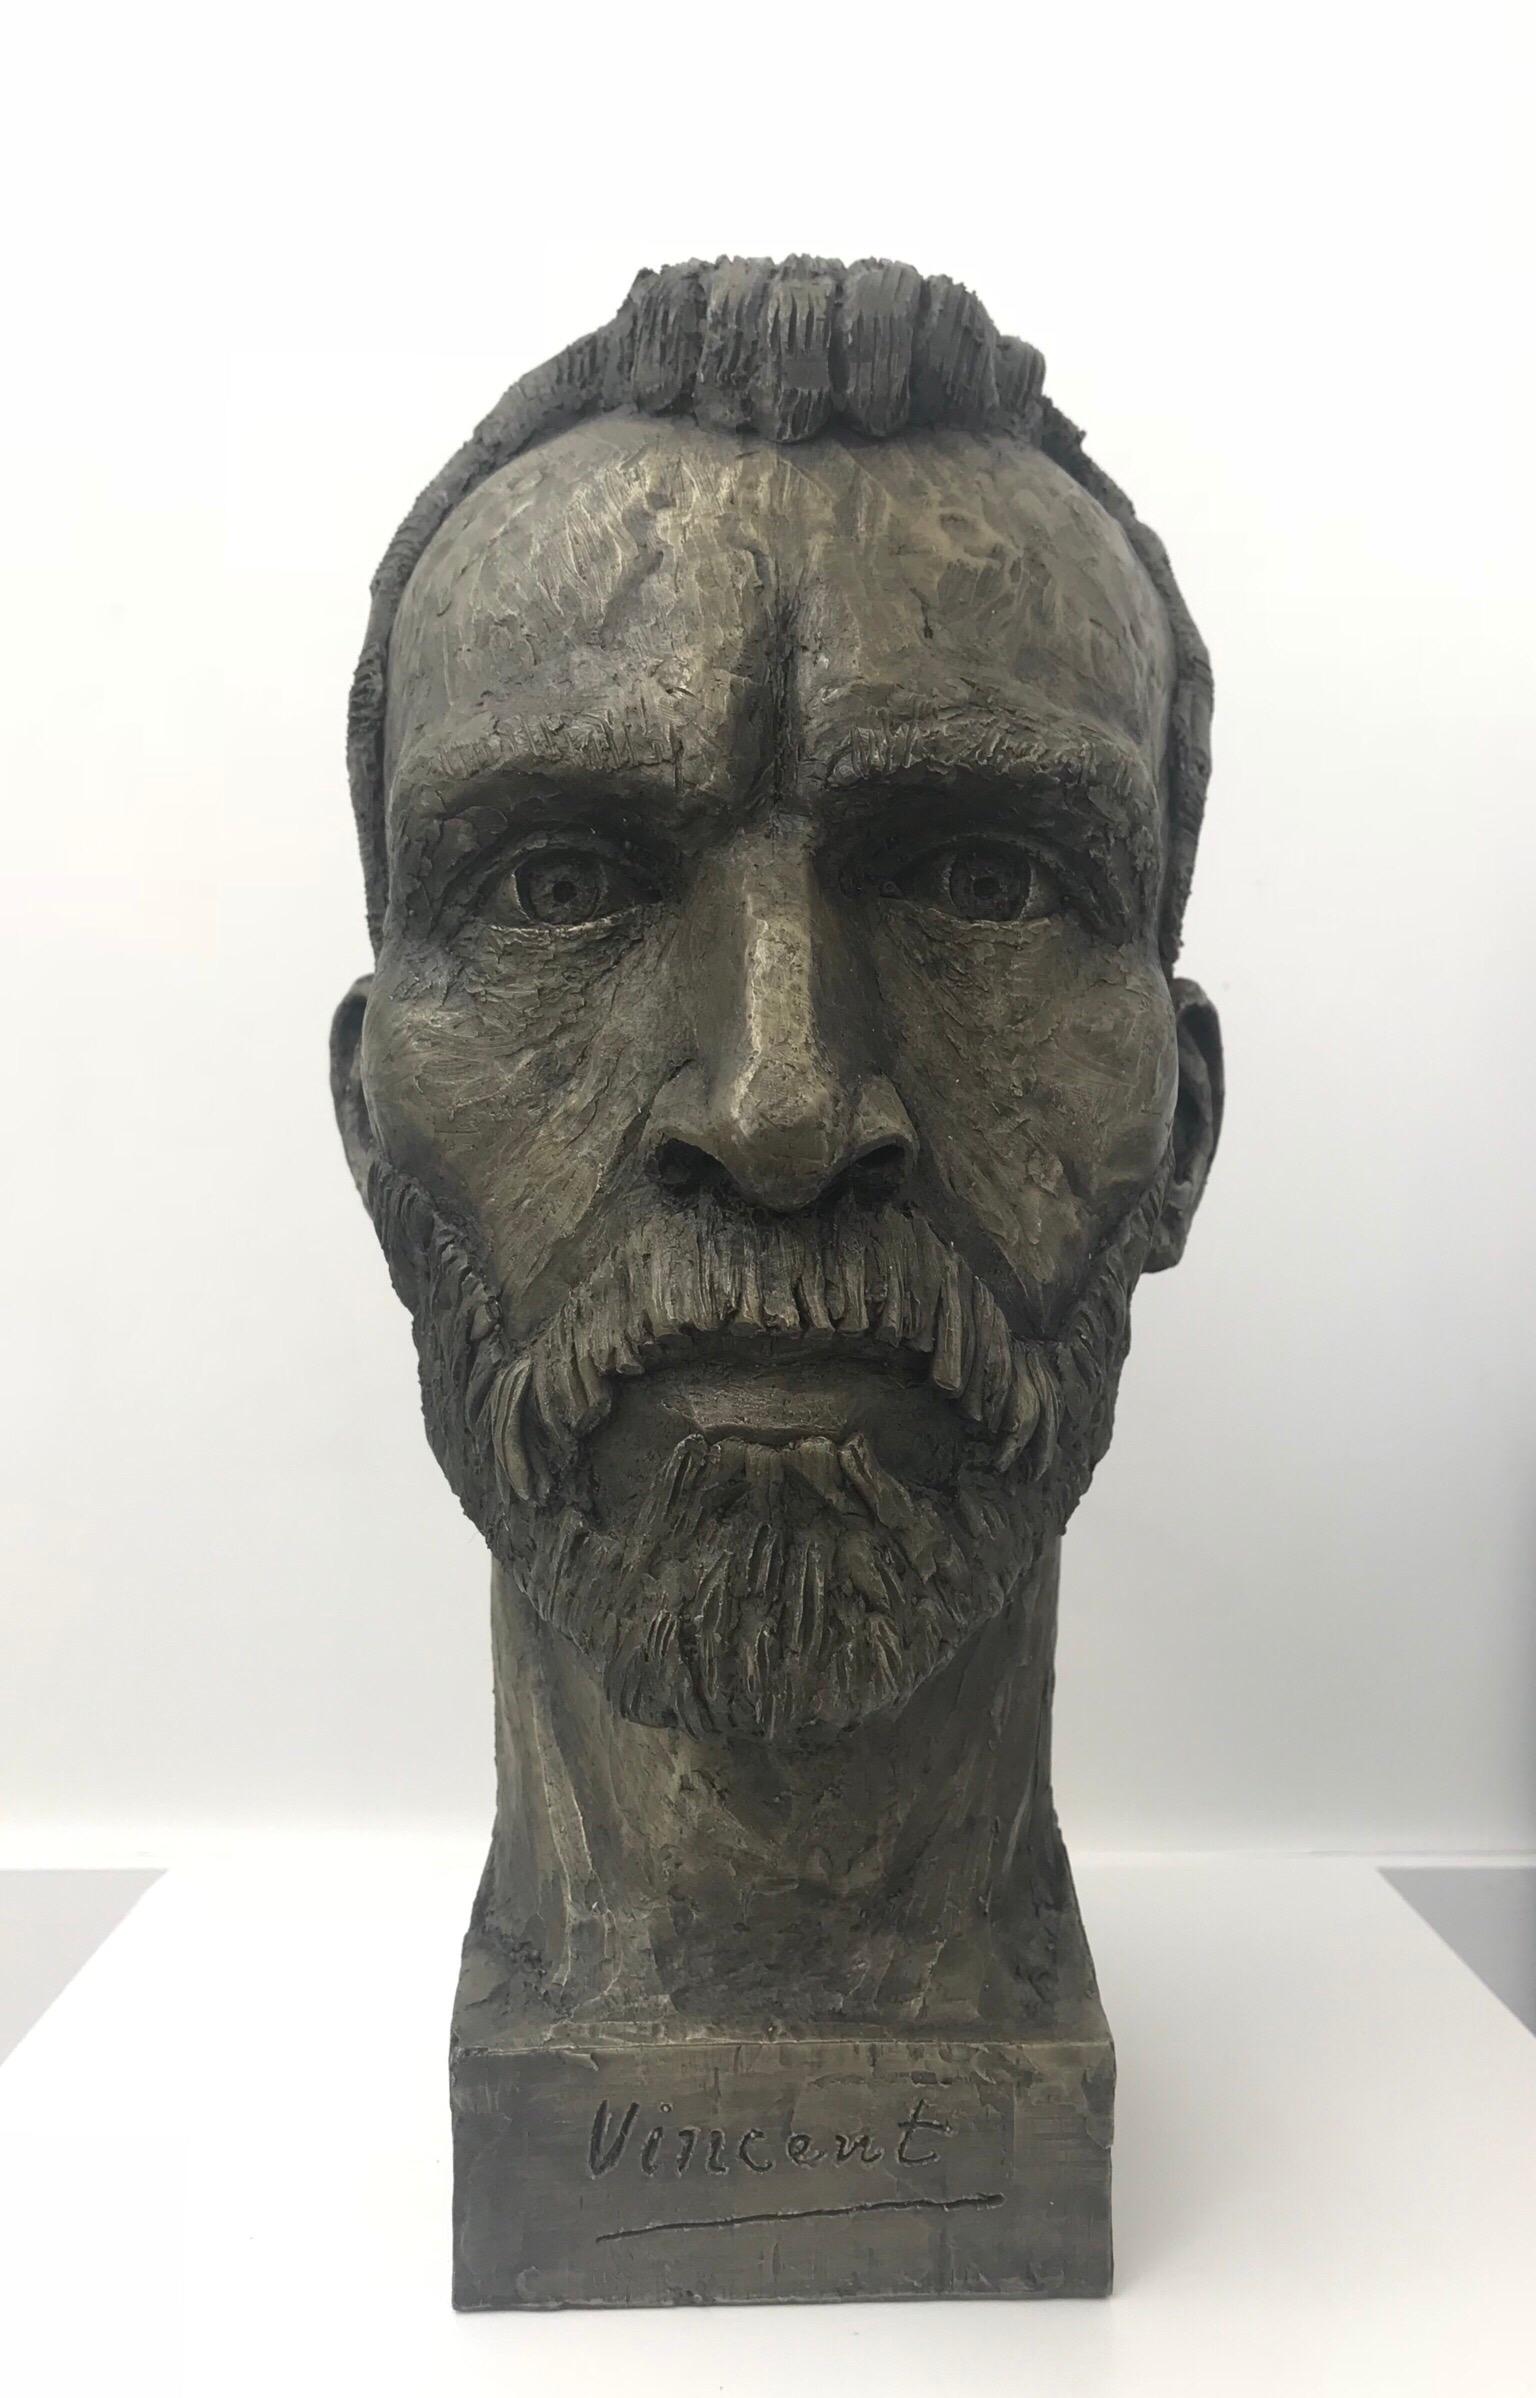 Cold Cast Bronze Bust Sculpture of Vincent Van Gogh by British Sculptor Artist